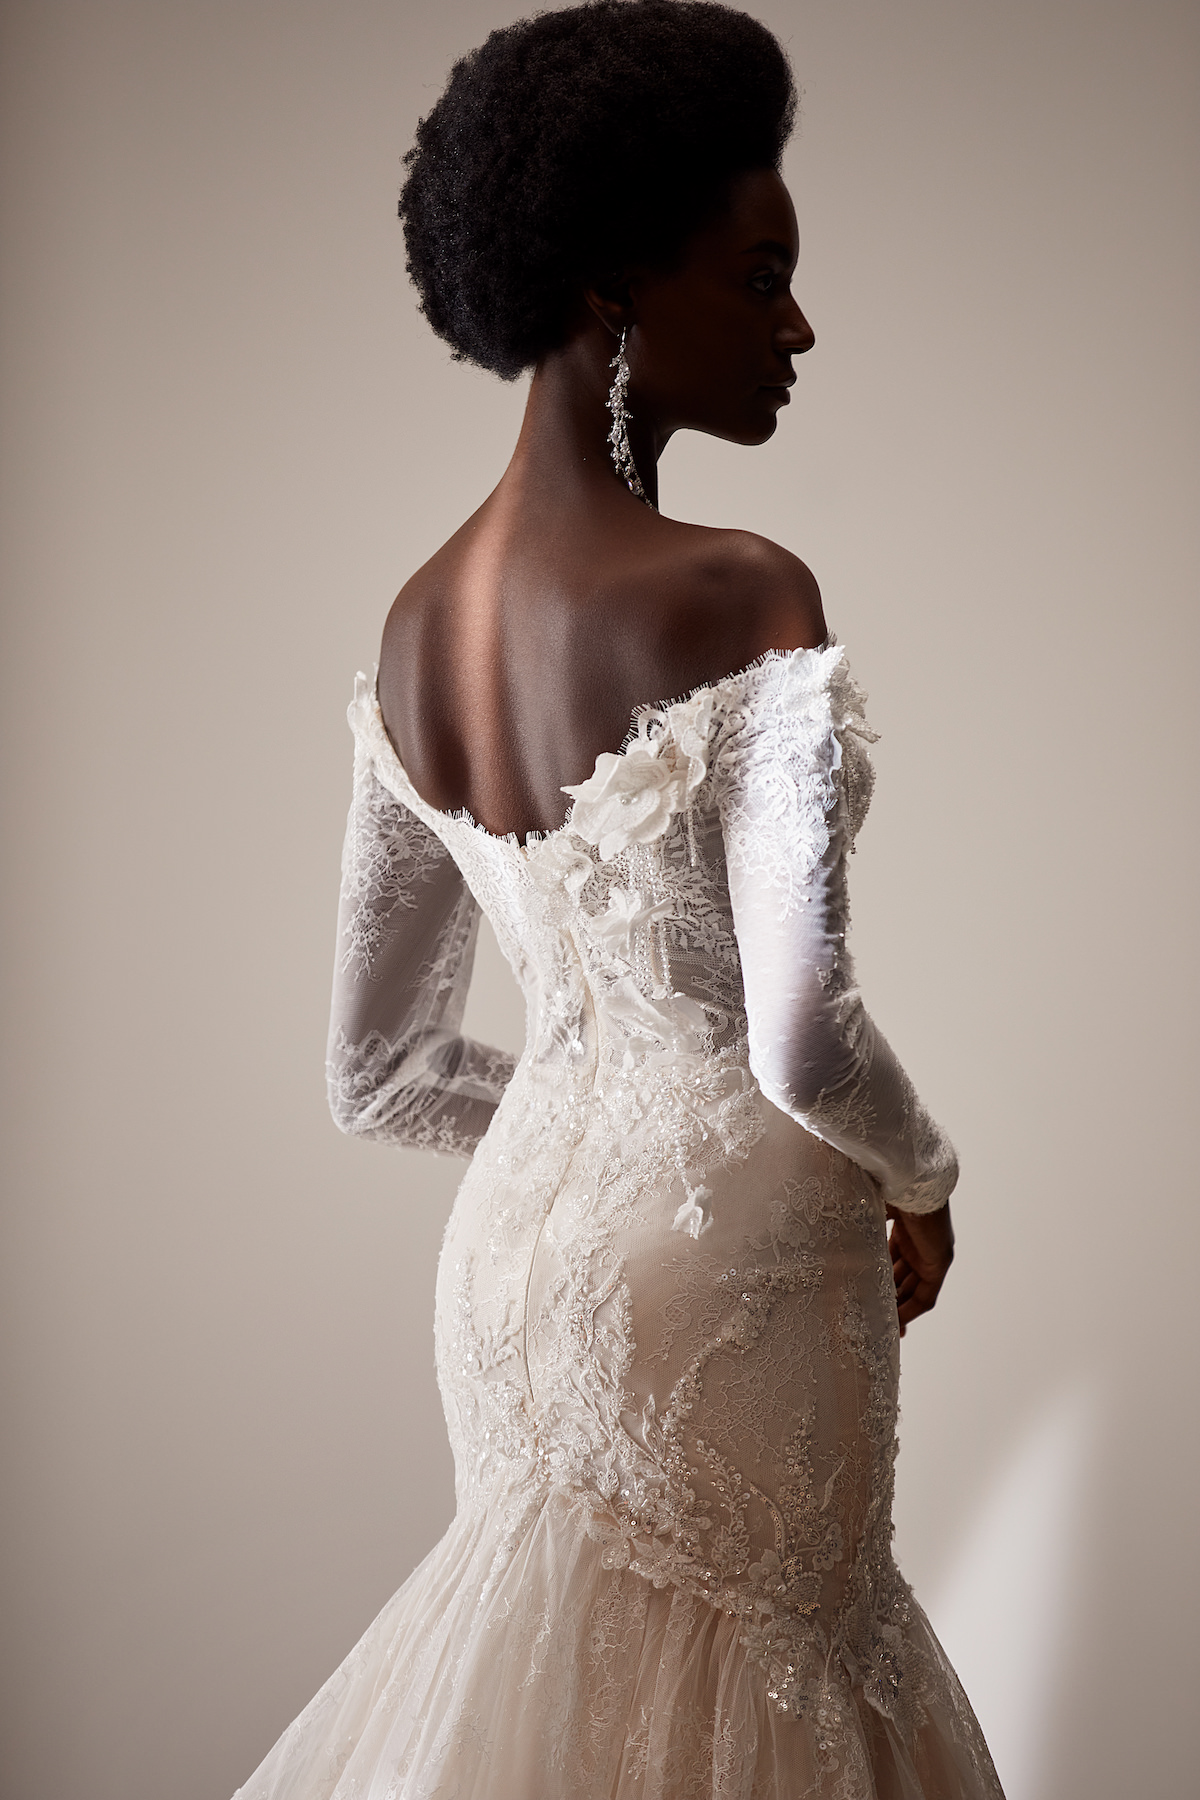 Long sleeve Wedding Dress by Milla Nova - Lola white lace